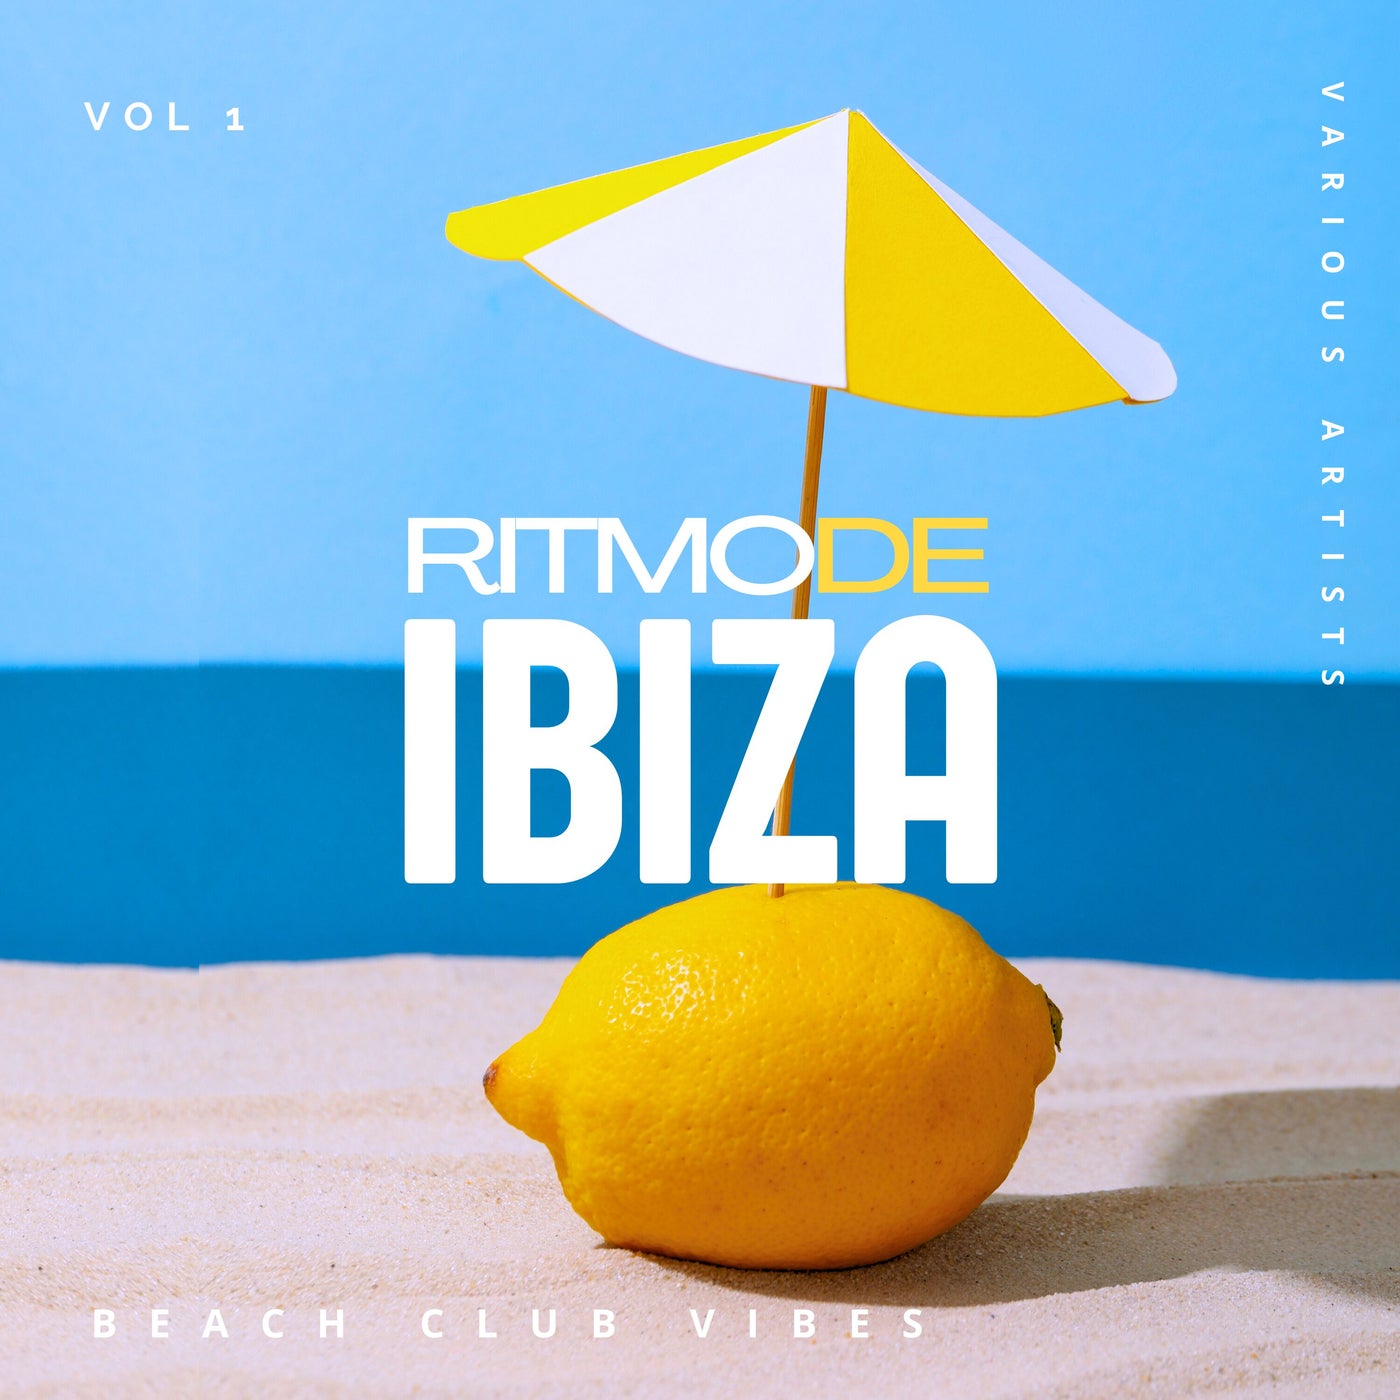 Ritmo De Ibiza (Beach Club Vibes), Vol. 1